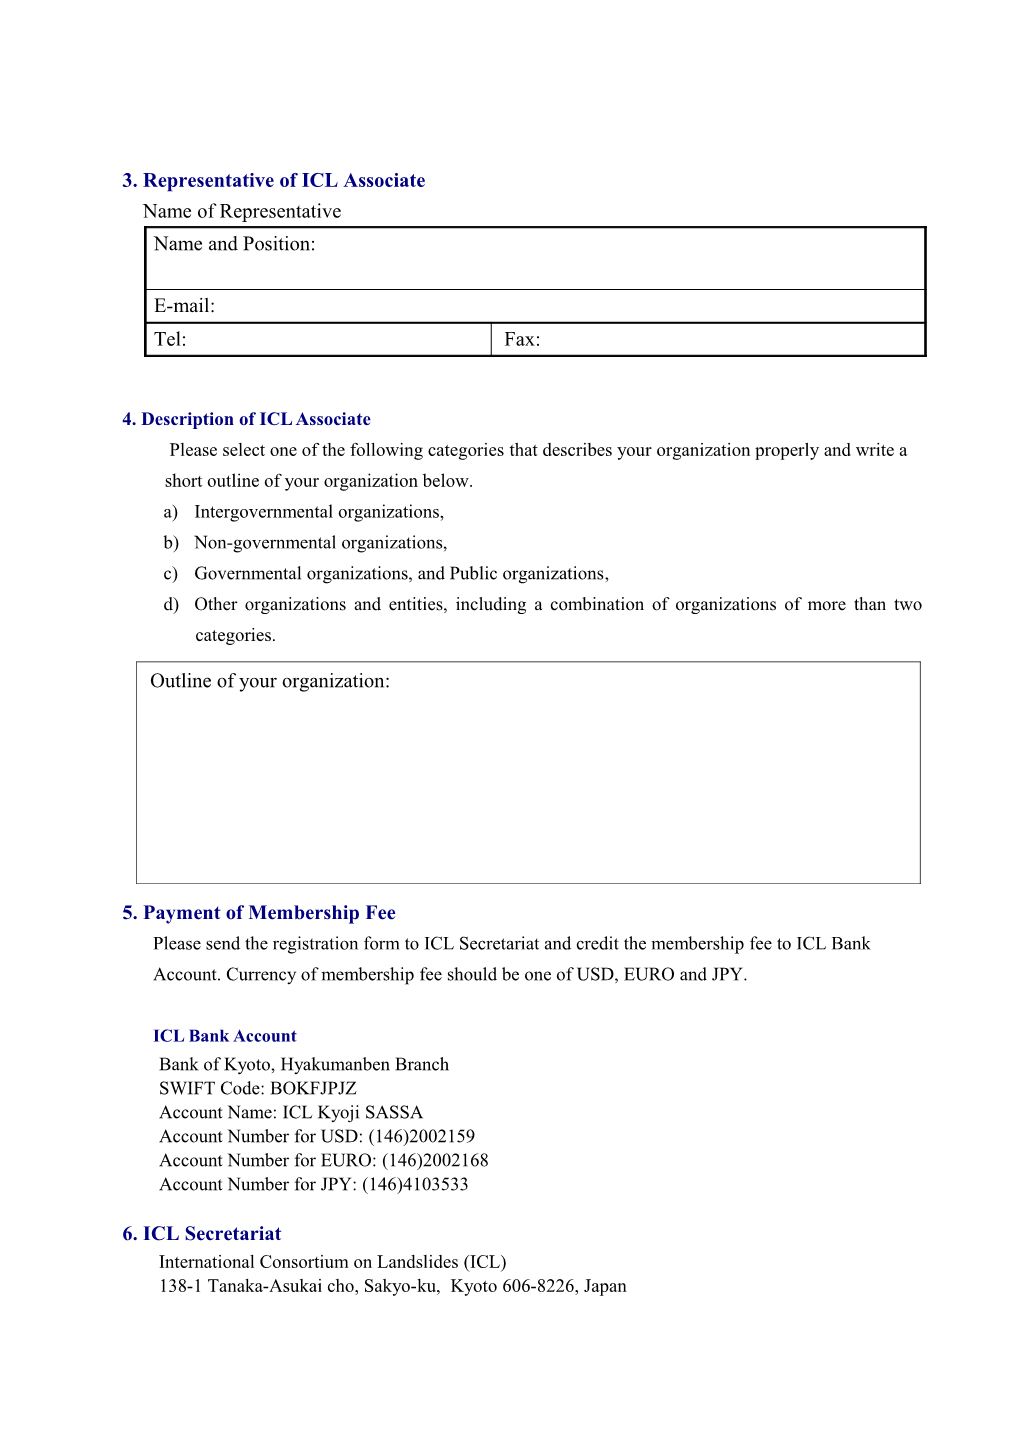 ICL Associate Registration Form 2018